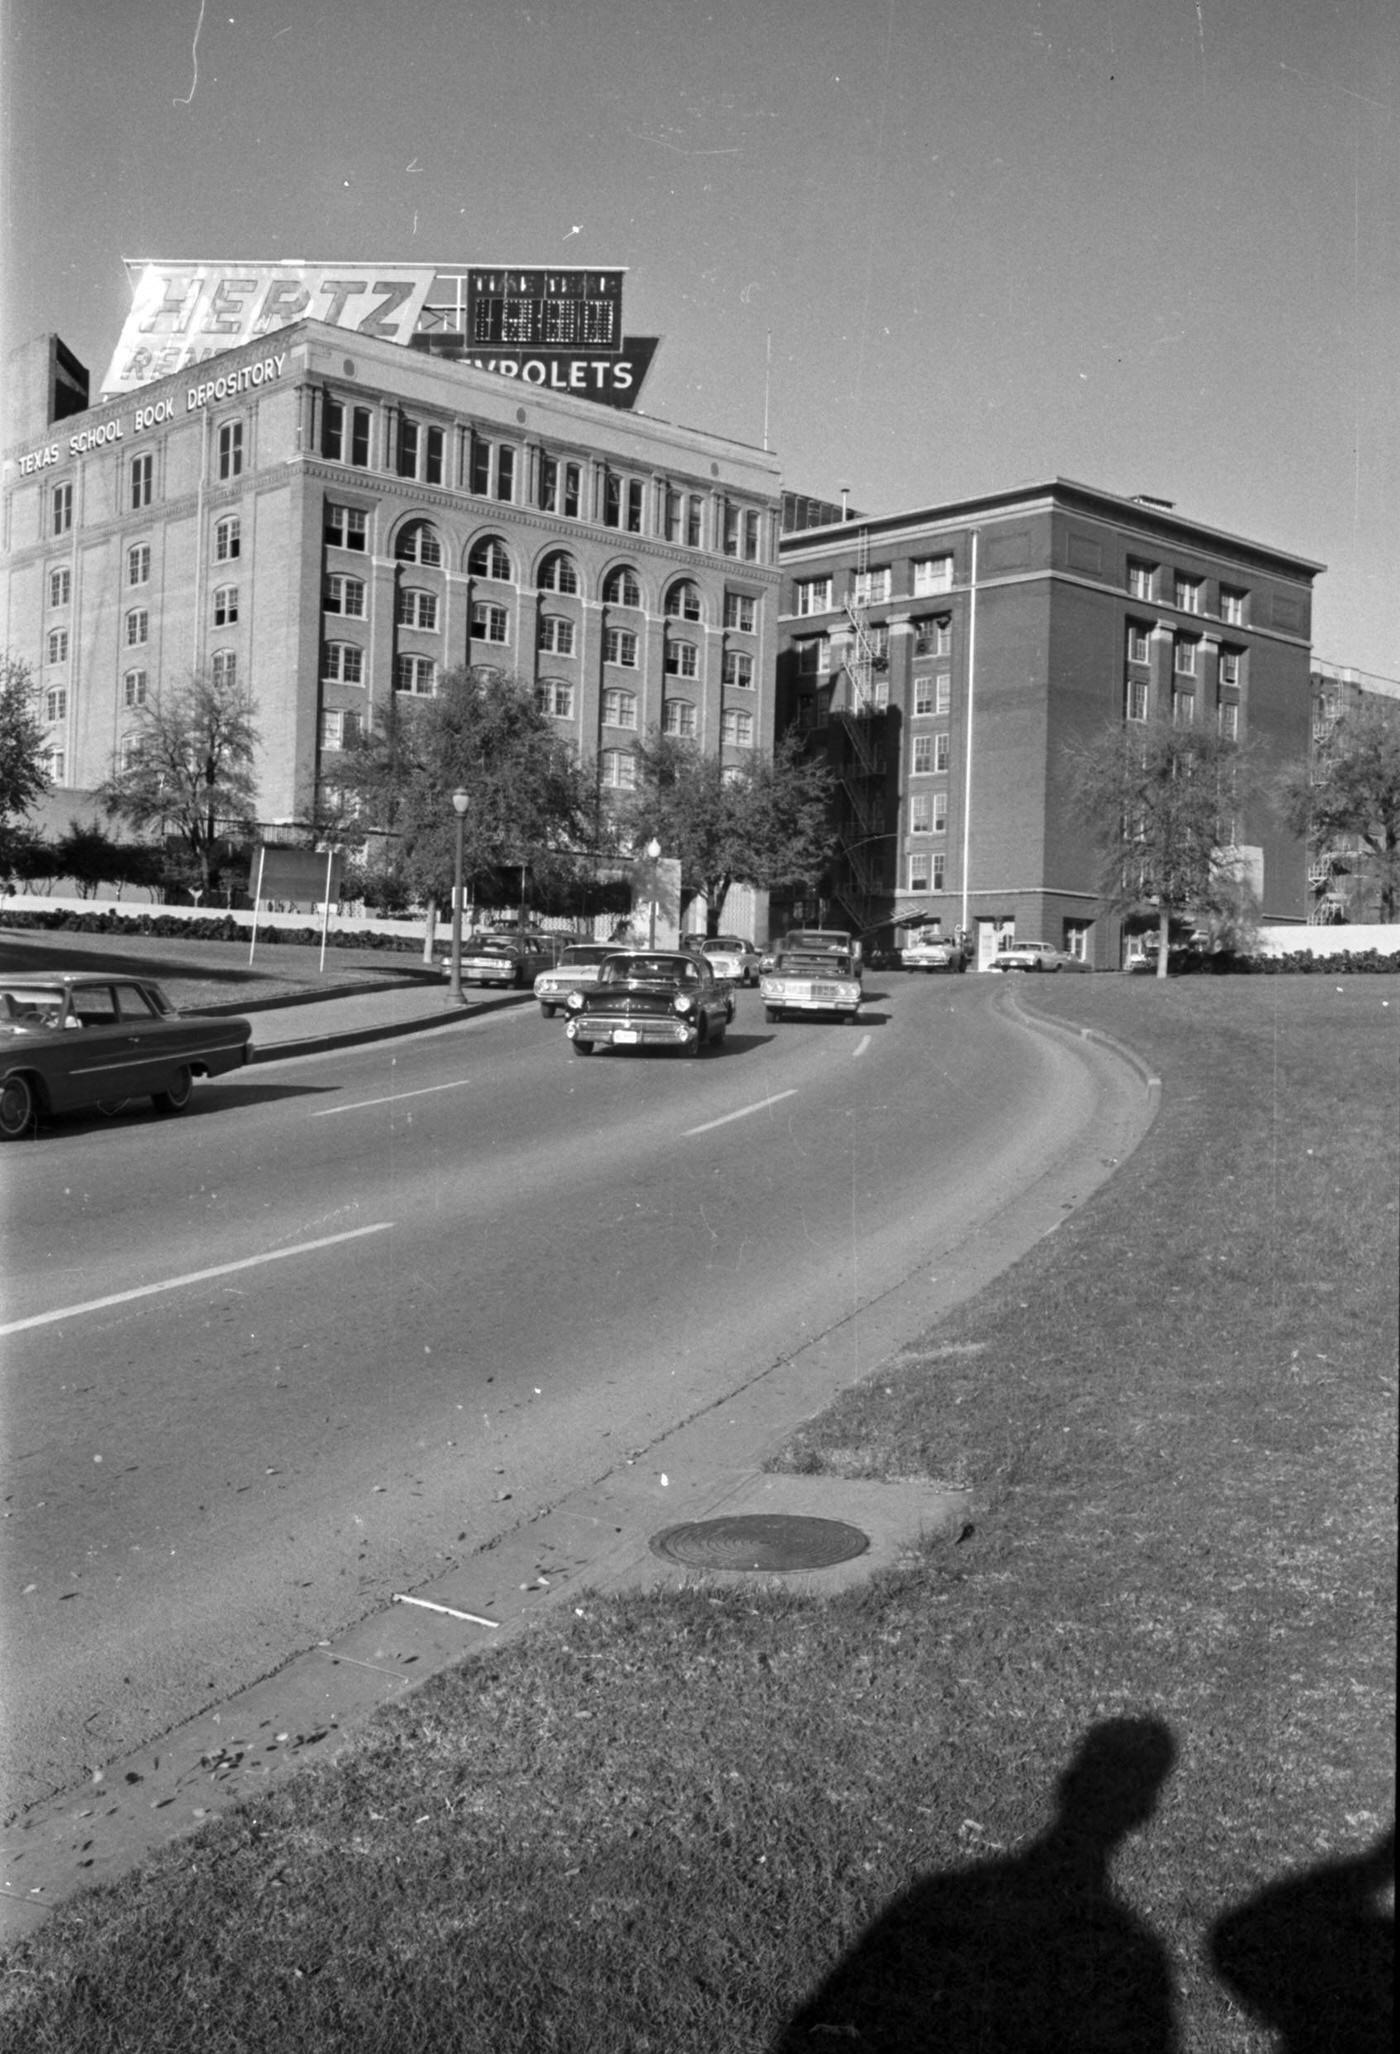 Looking northeast toward the Texas School Book Depository building following assassination of President John F. Kennedy, 1963